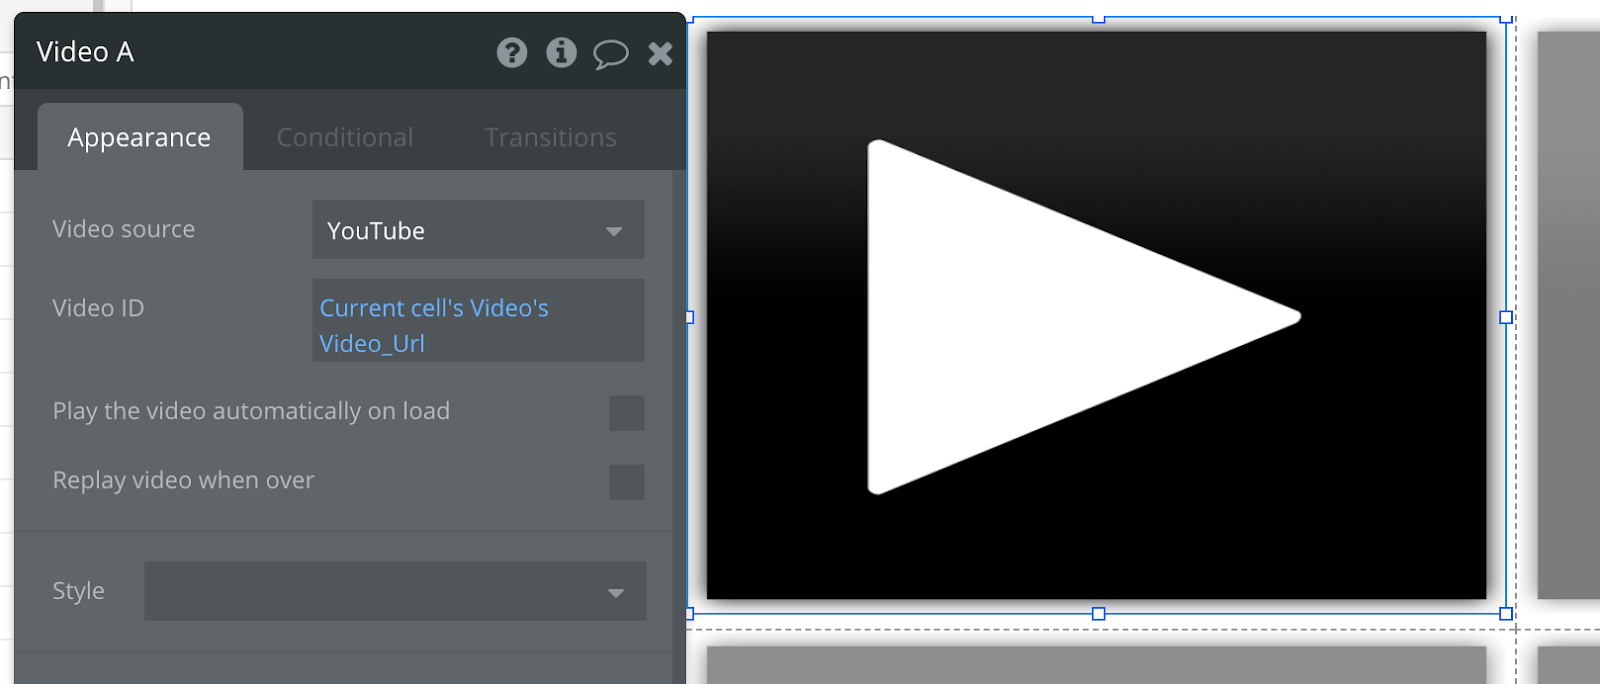 Bubble no code Youtube clone tutorial walkthrough - video appearance.